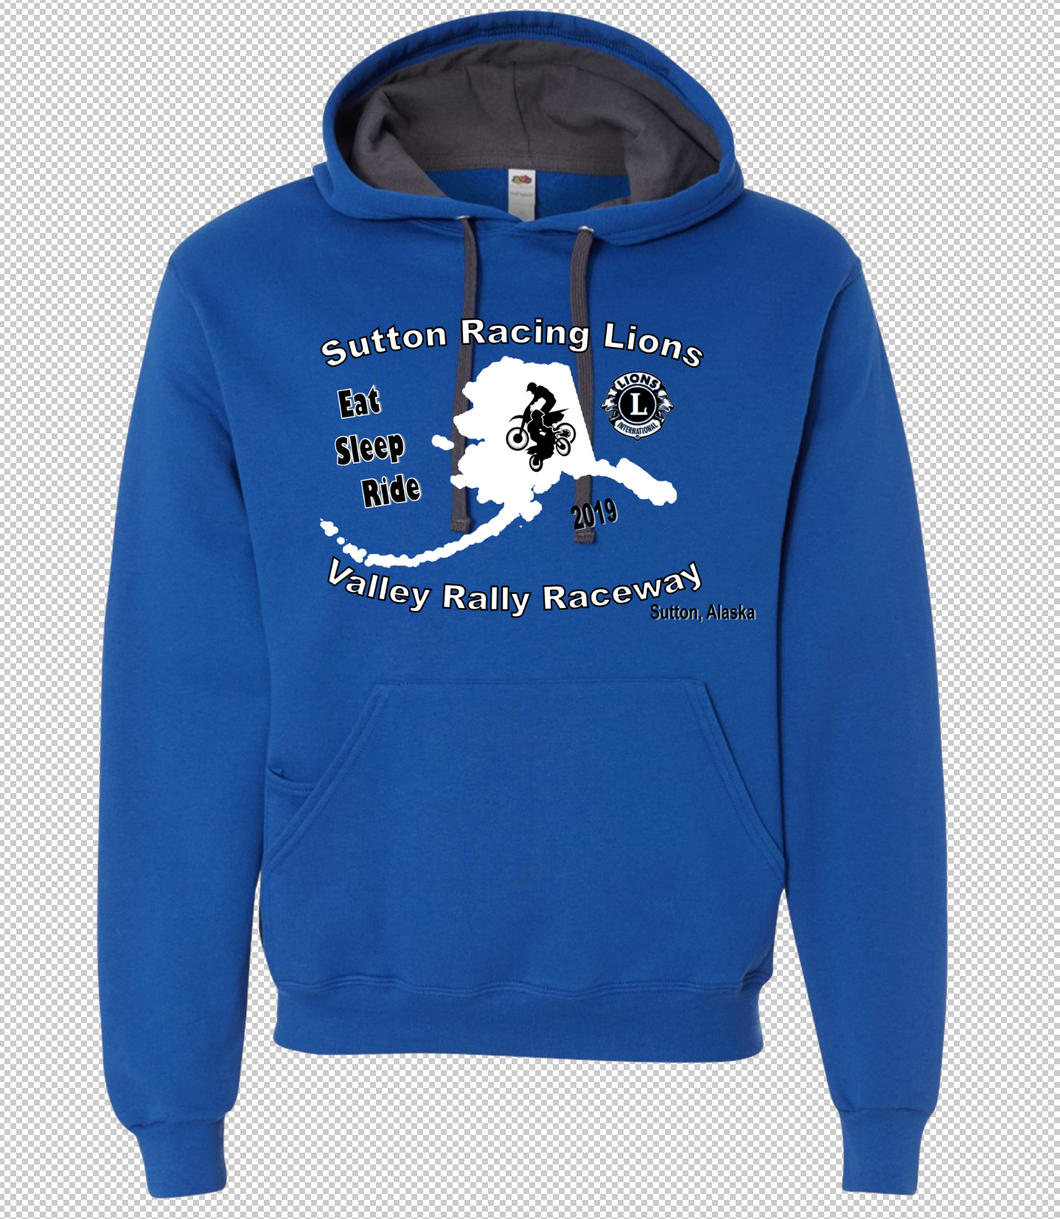 Sutton Racing Lions Hoodie Adult